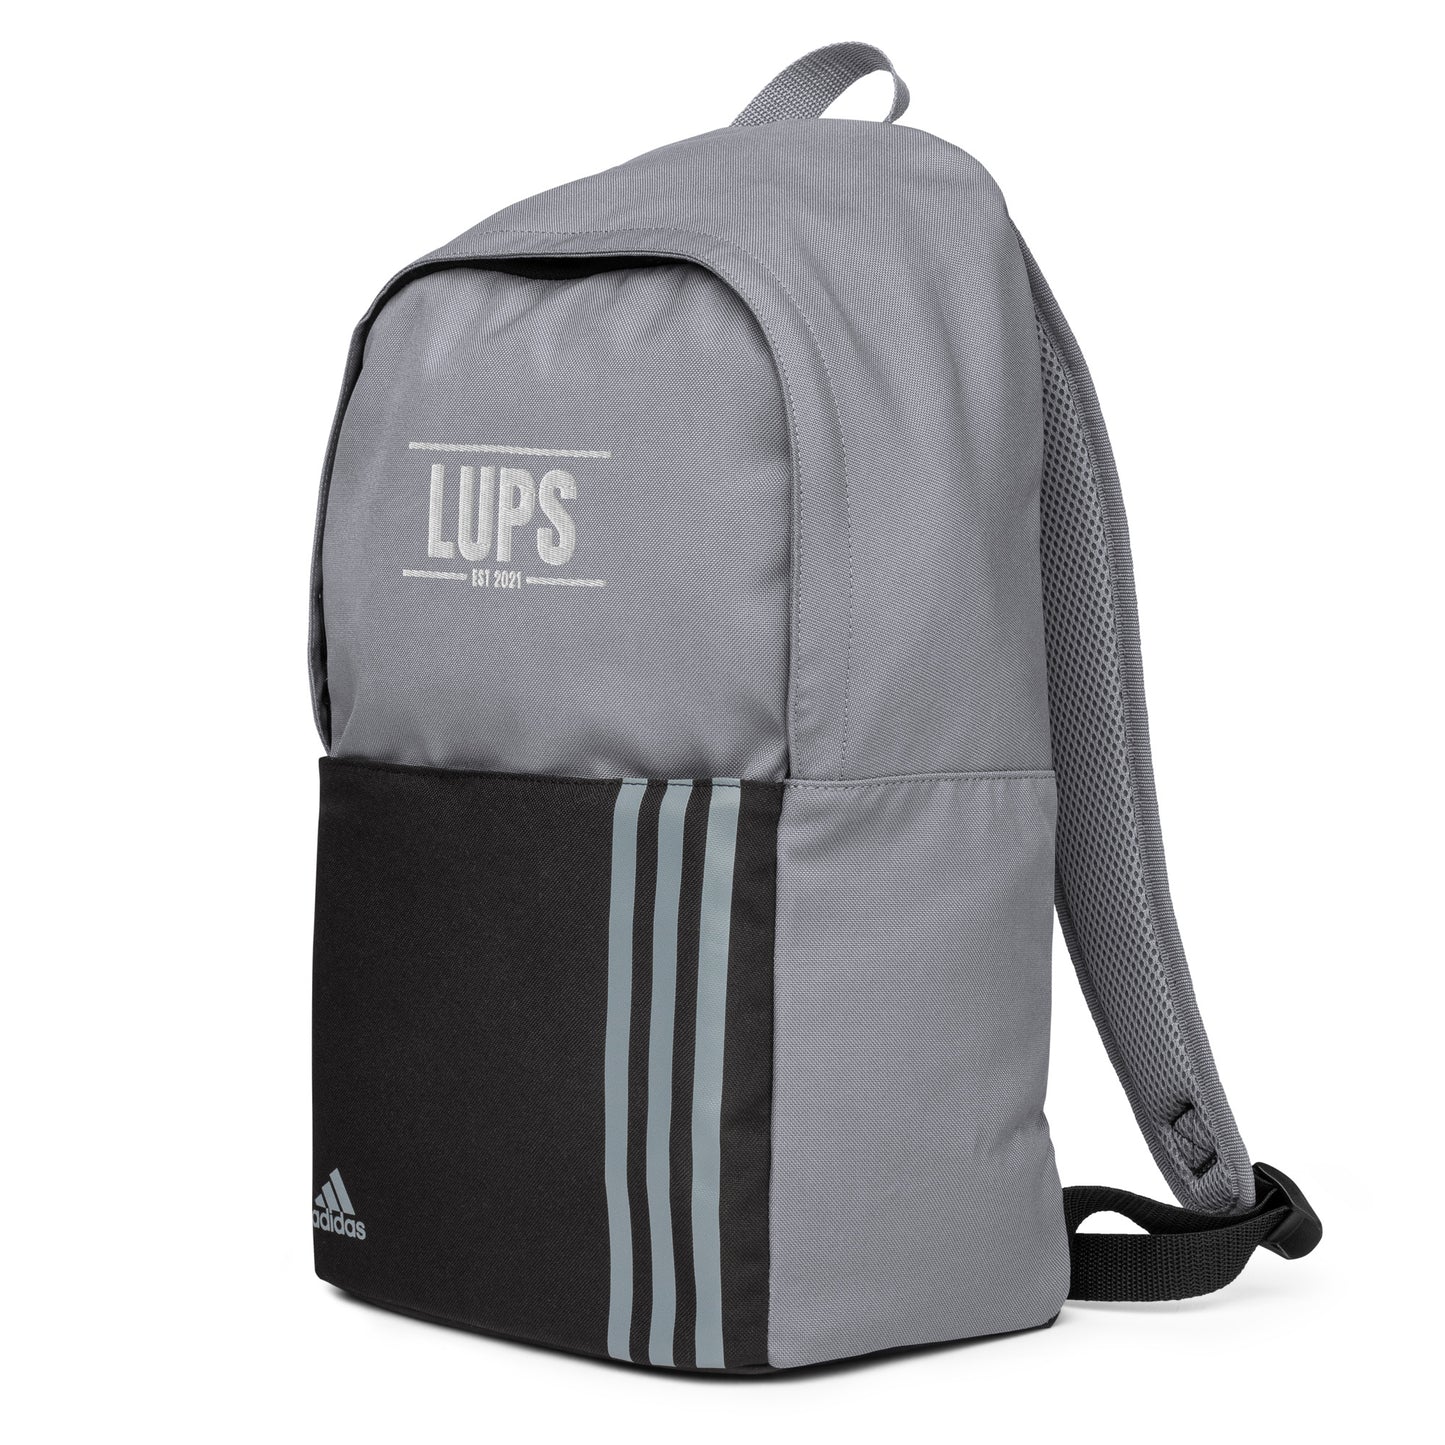 ADIDAS x LUPS Backpack